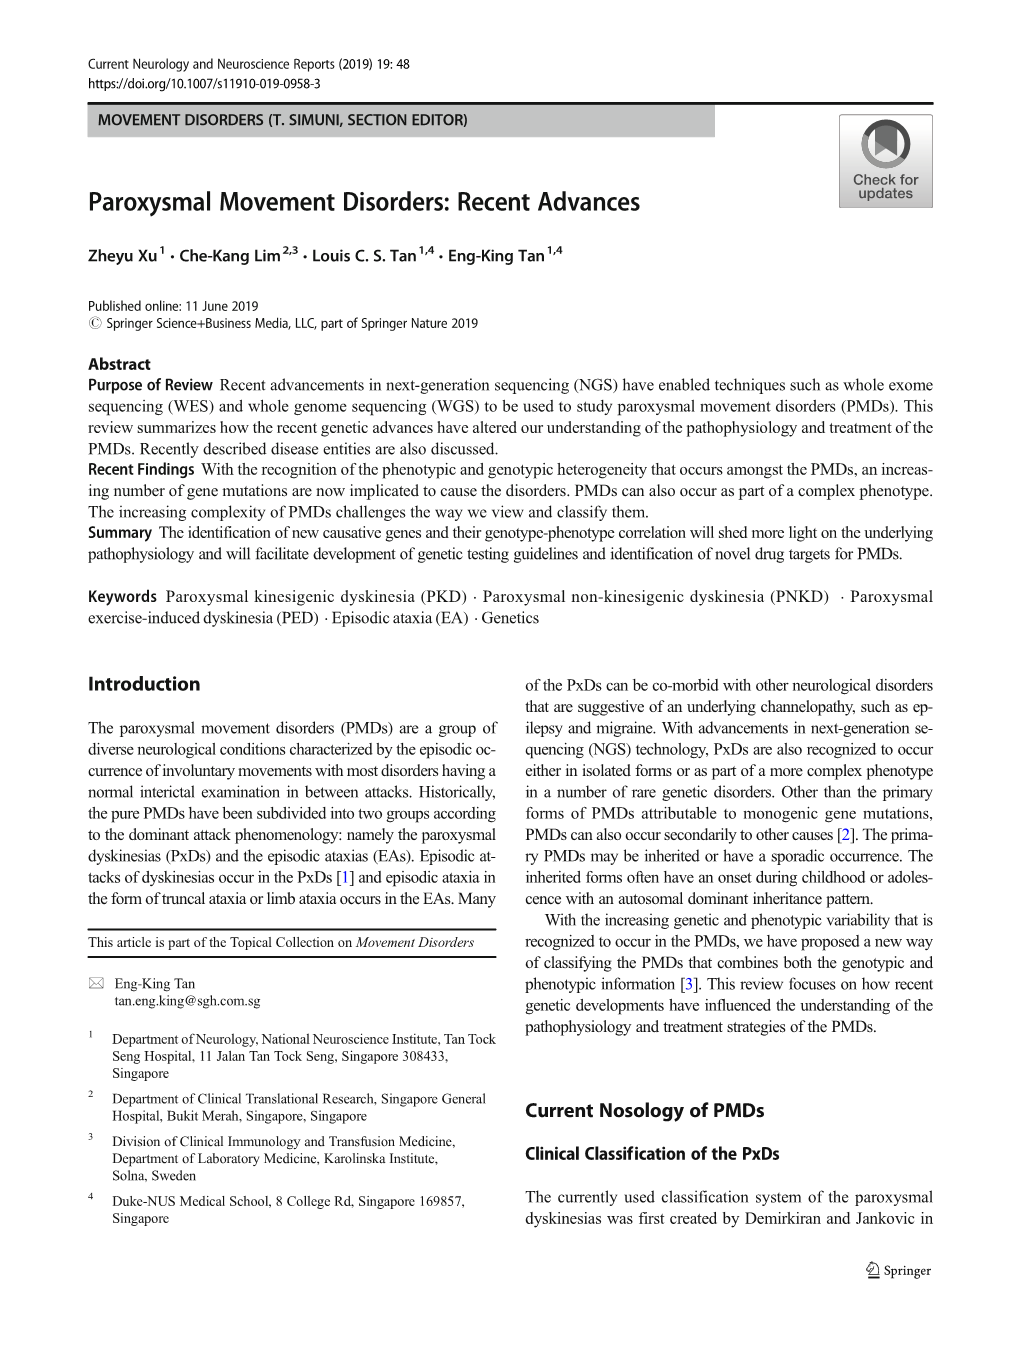 Paroxysmal Movement Disorders: Recent Advances